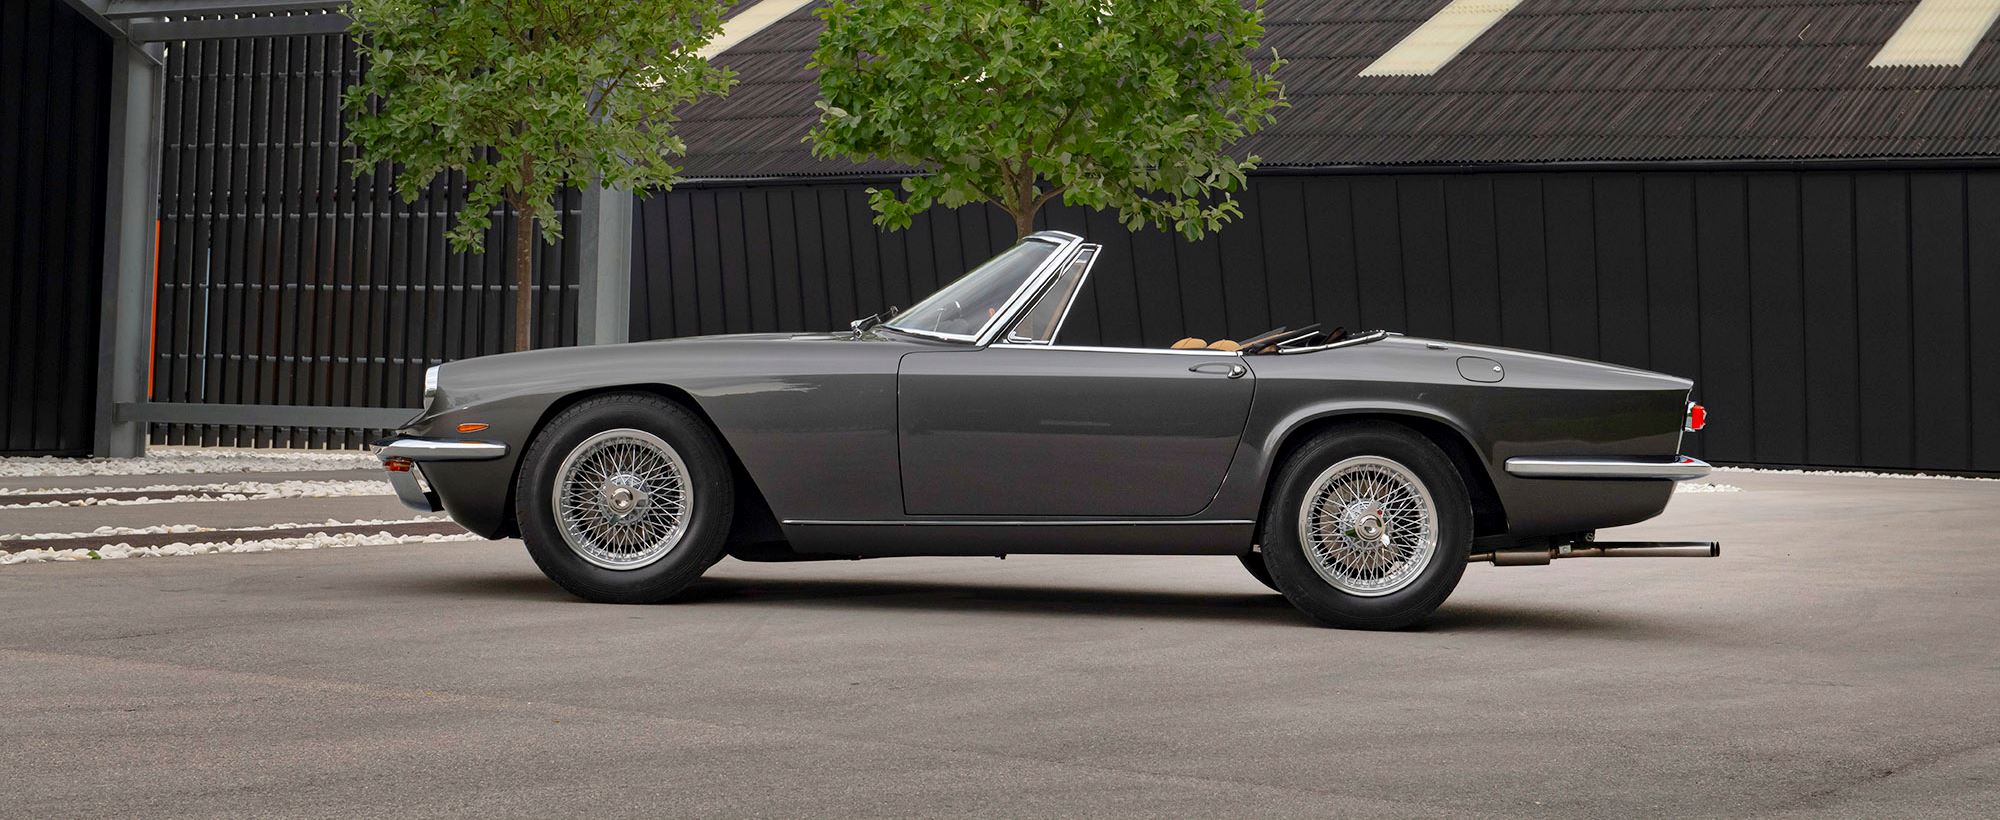 Maserati Iniezione 007.jpg